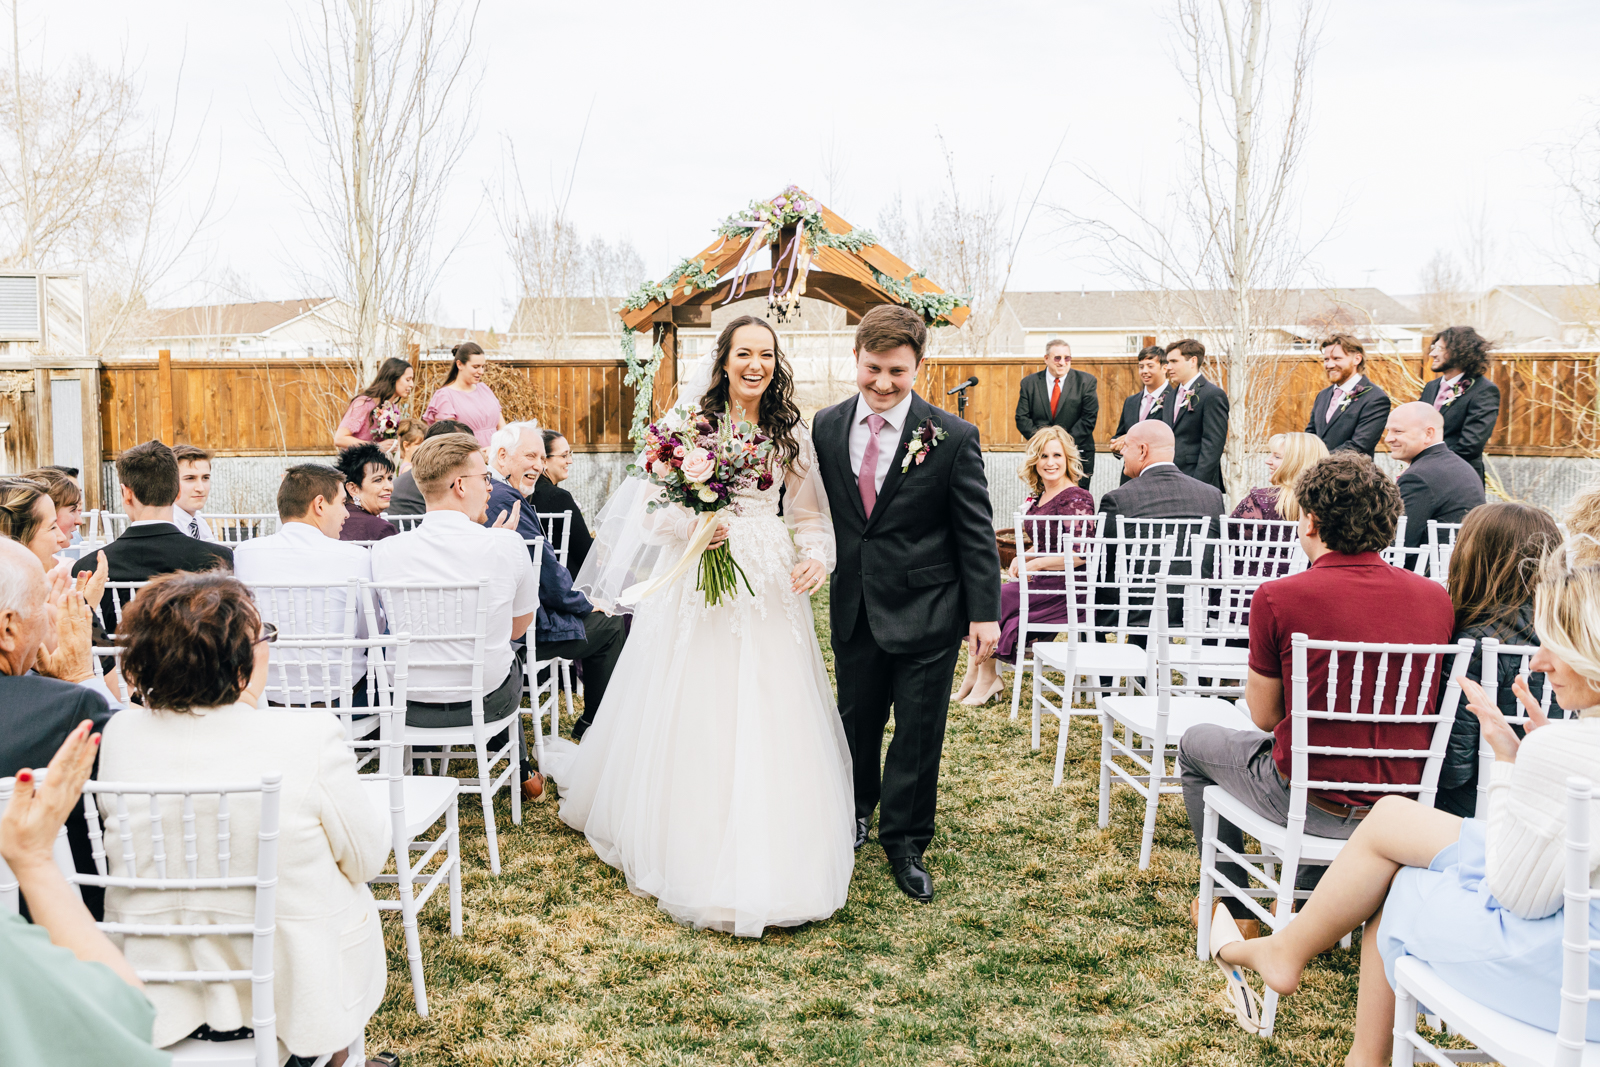 Jackson Hole wedding photographer captures bride and groom leaving together